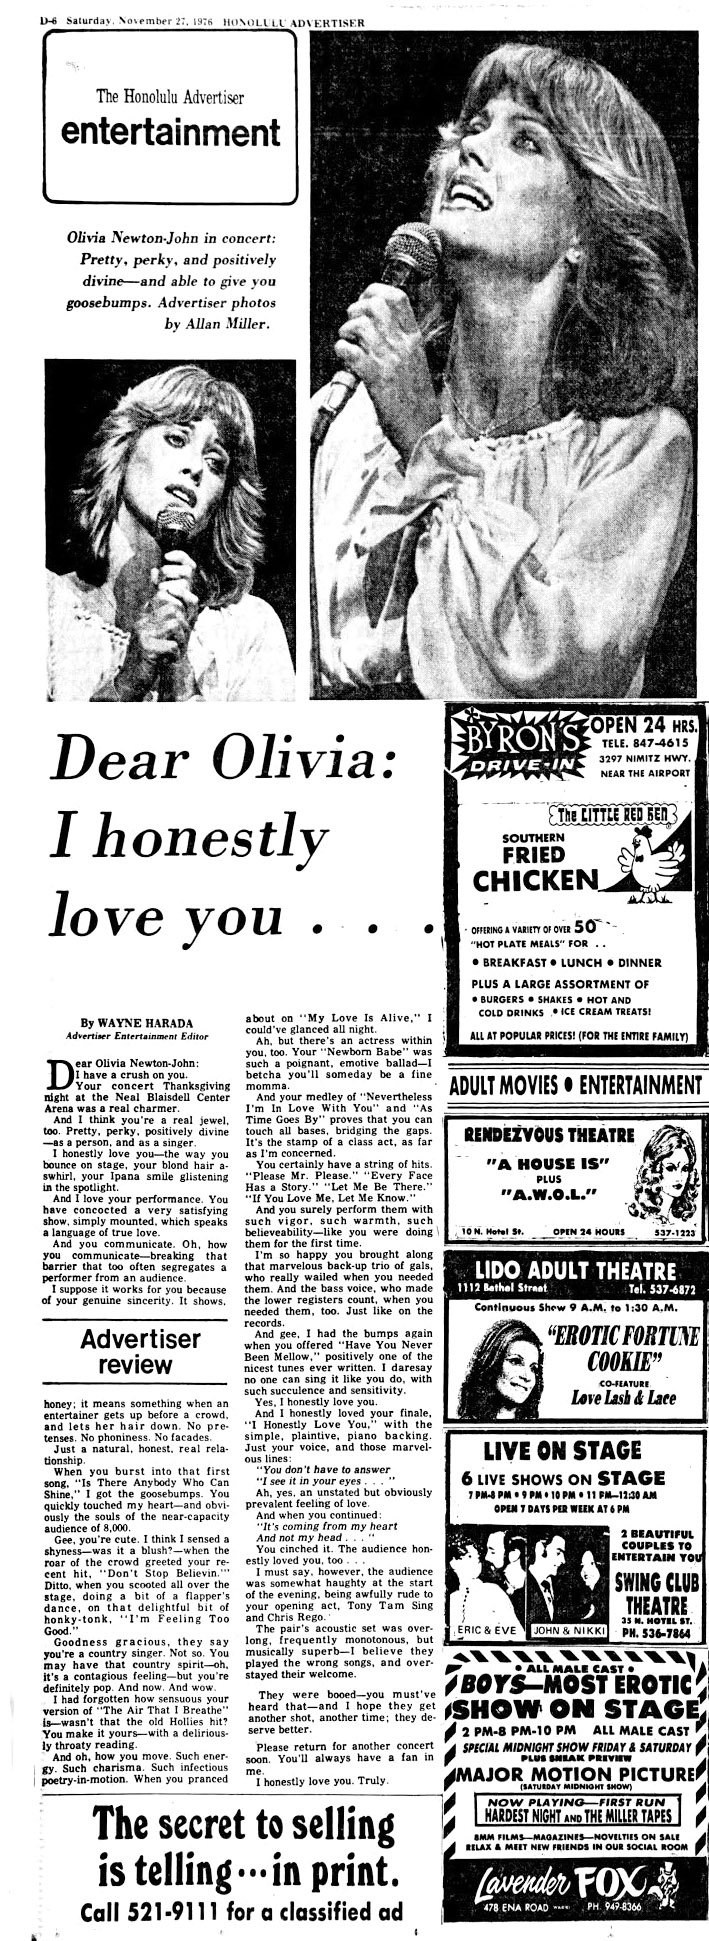 Dear Olivia - I honestly love you - Honululu Advertiser